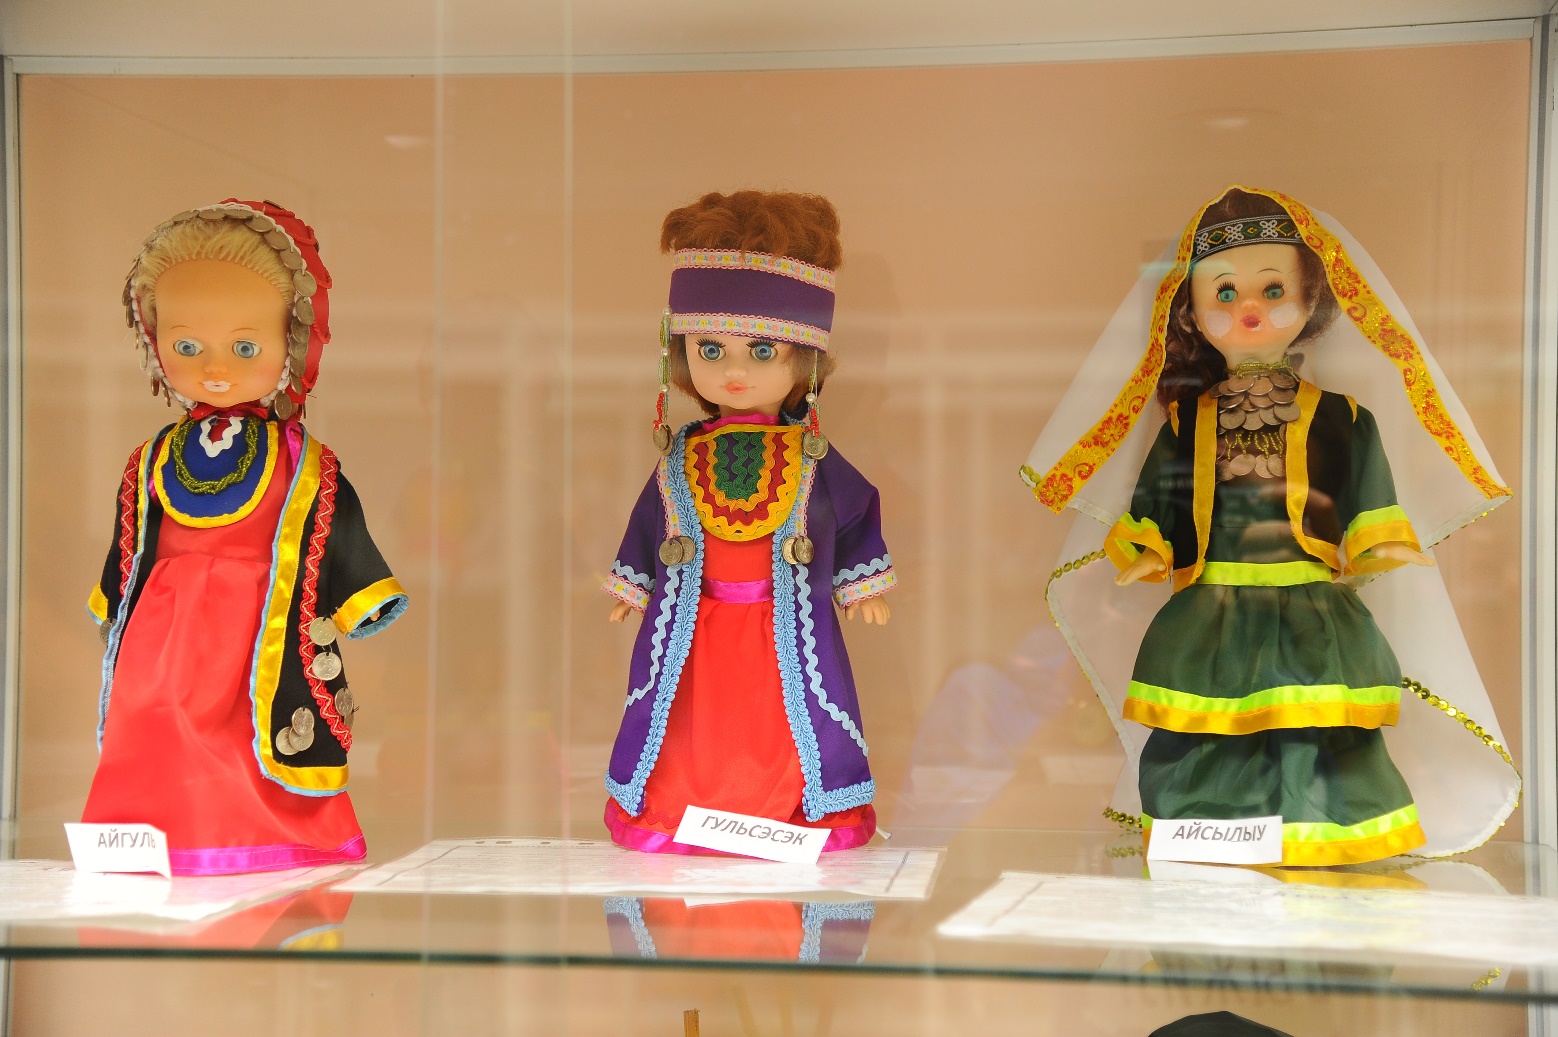 Янаул. Куклы в национальных костюмах